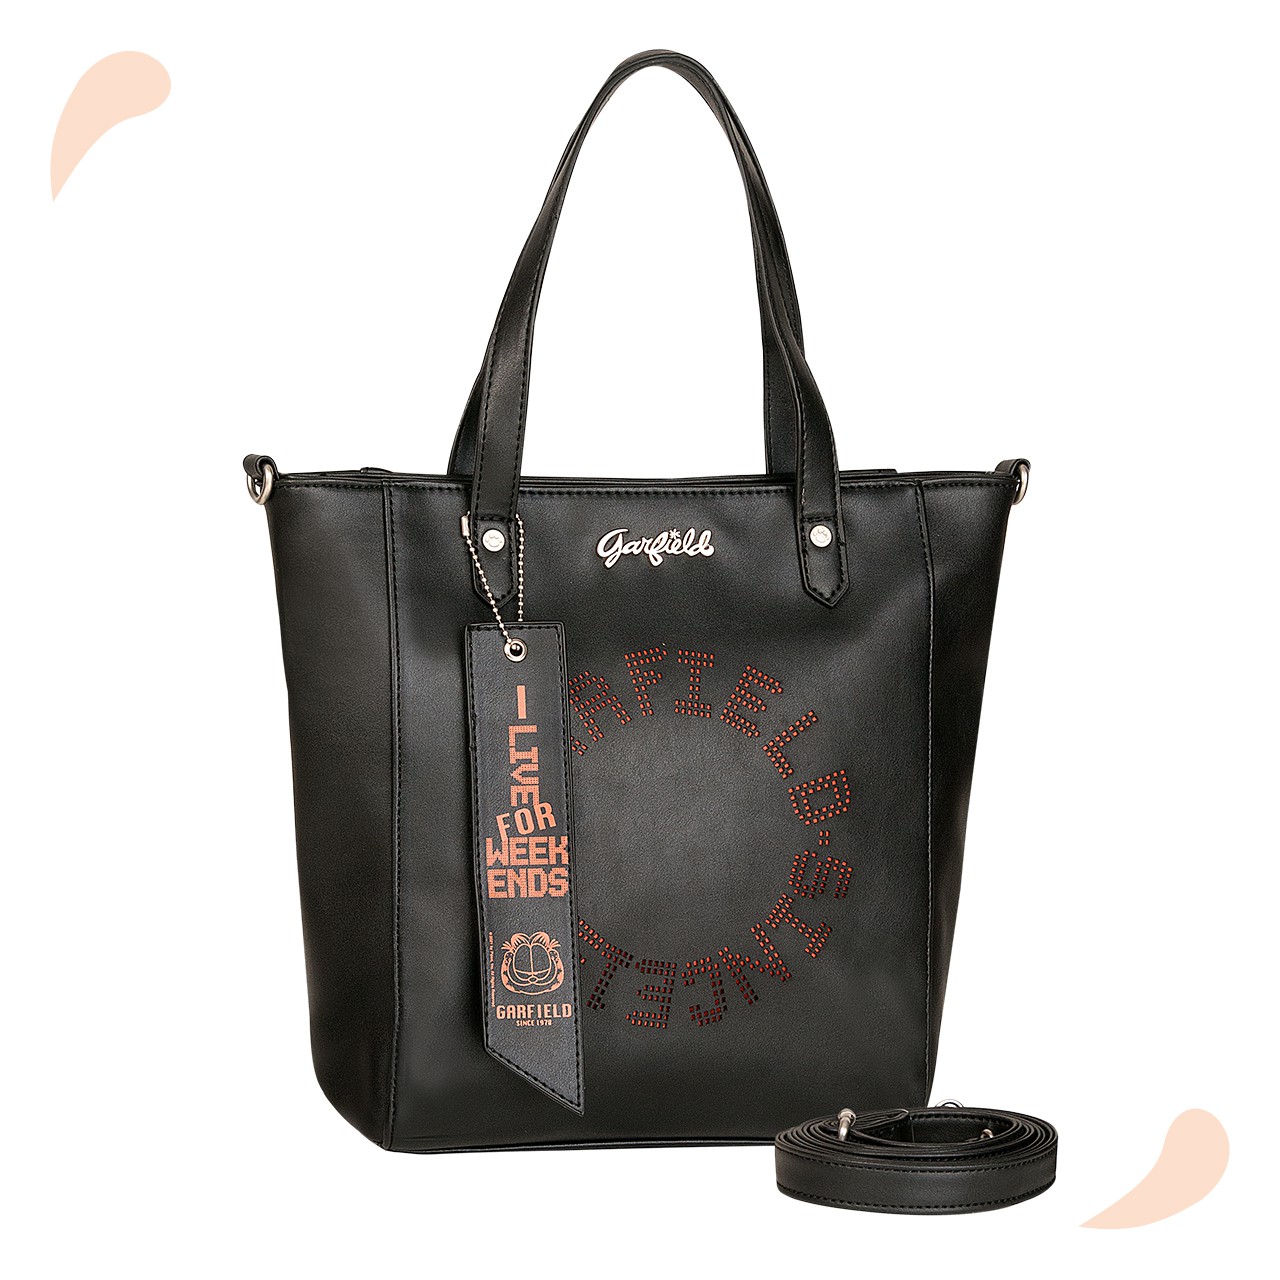 Bolsa Tote Bag Garfield Corino Preto - Mooja - Bolsas, mochilas e acessórios